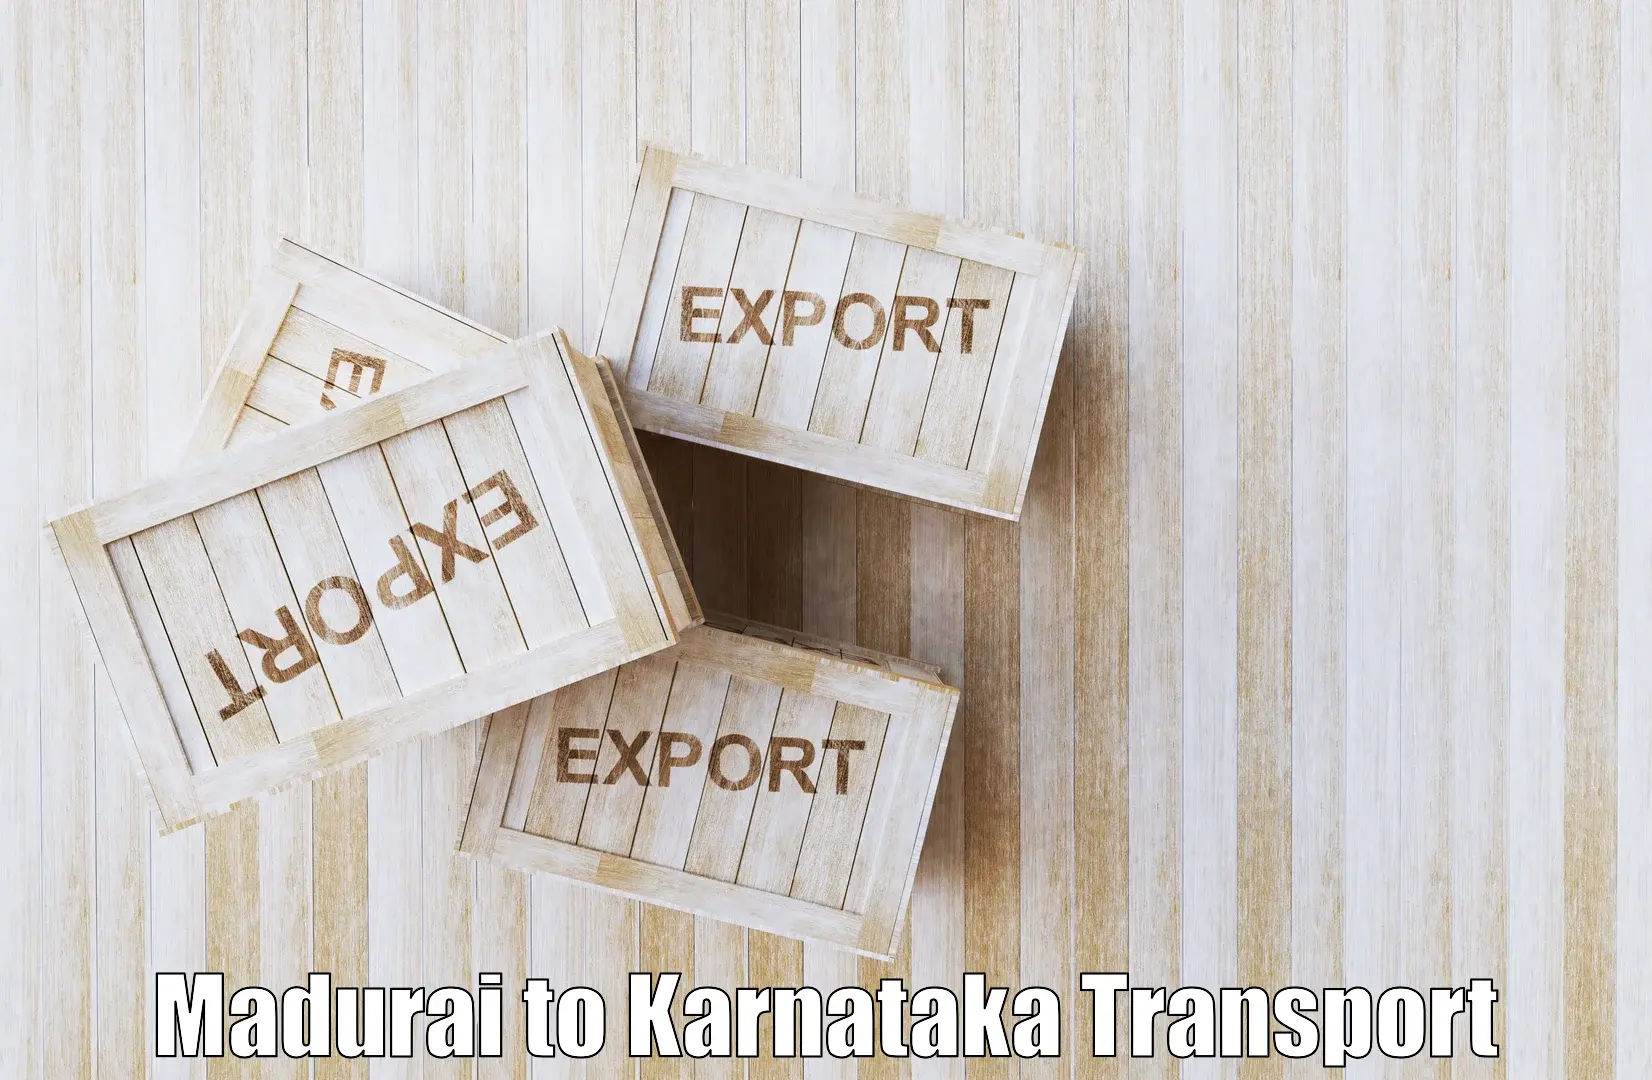 Transport in sharing in Madurai to Kotturu